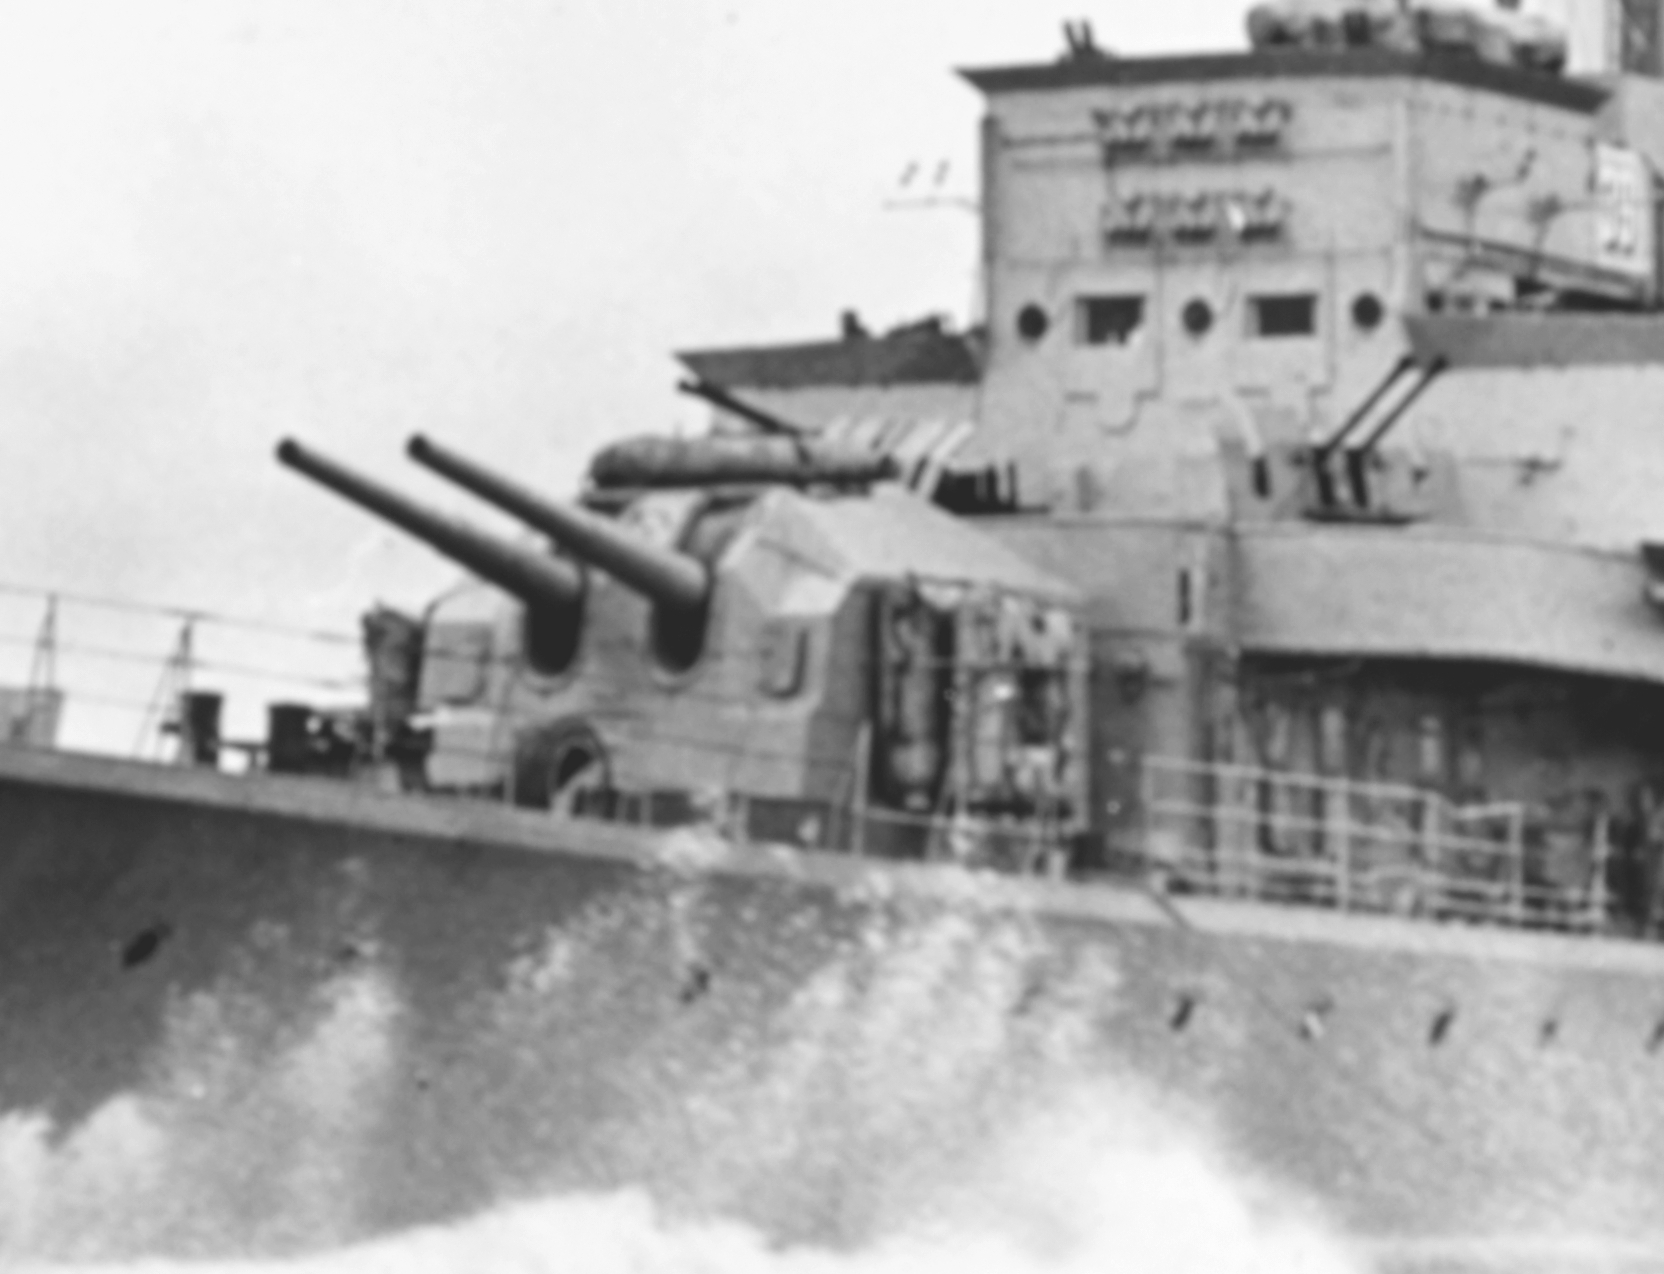 15 cm TbtsK C/36 naval gun - Wikipedia